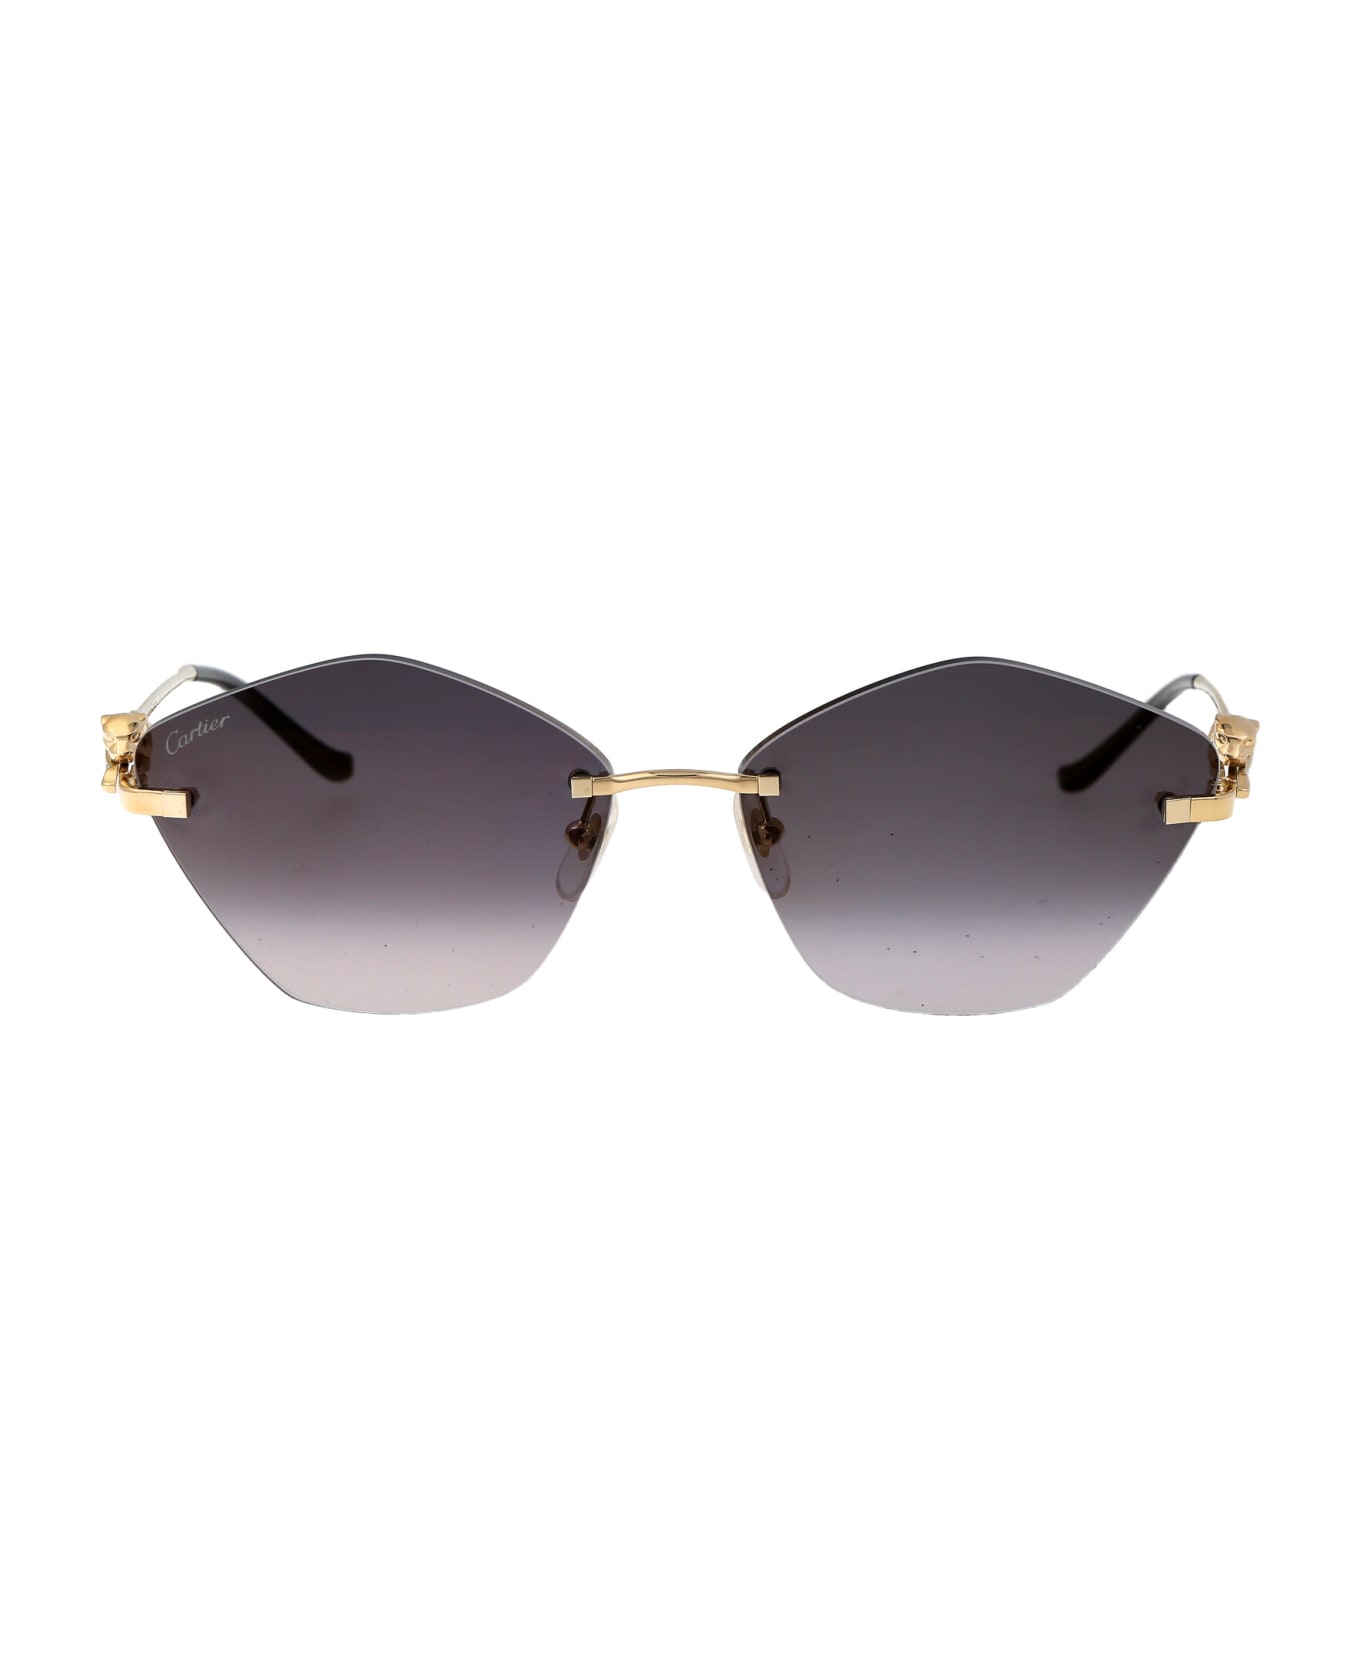 Cartier Eyewear Ct0429s Sunglasses - 001 GOLD GOLD GREY サングラス